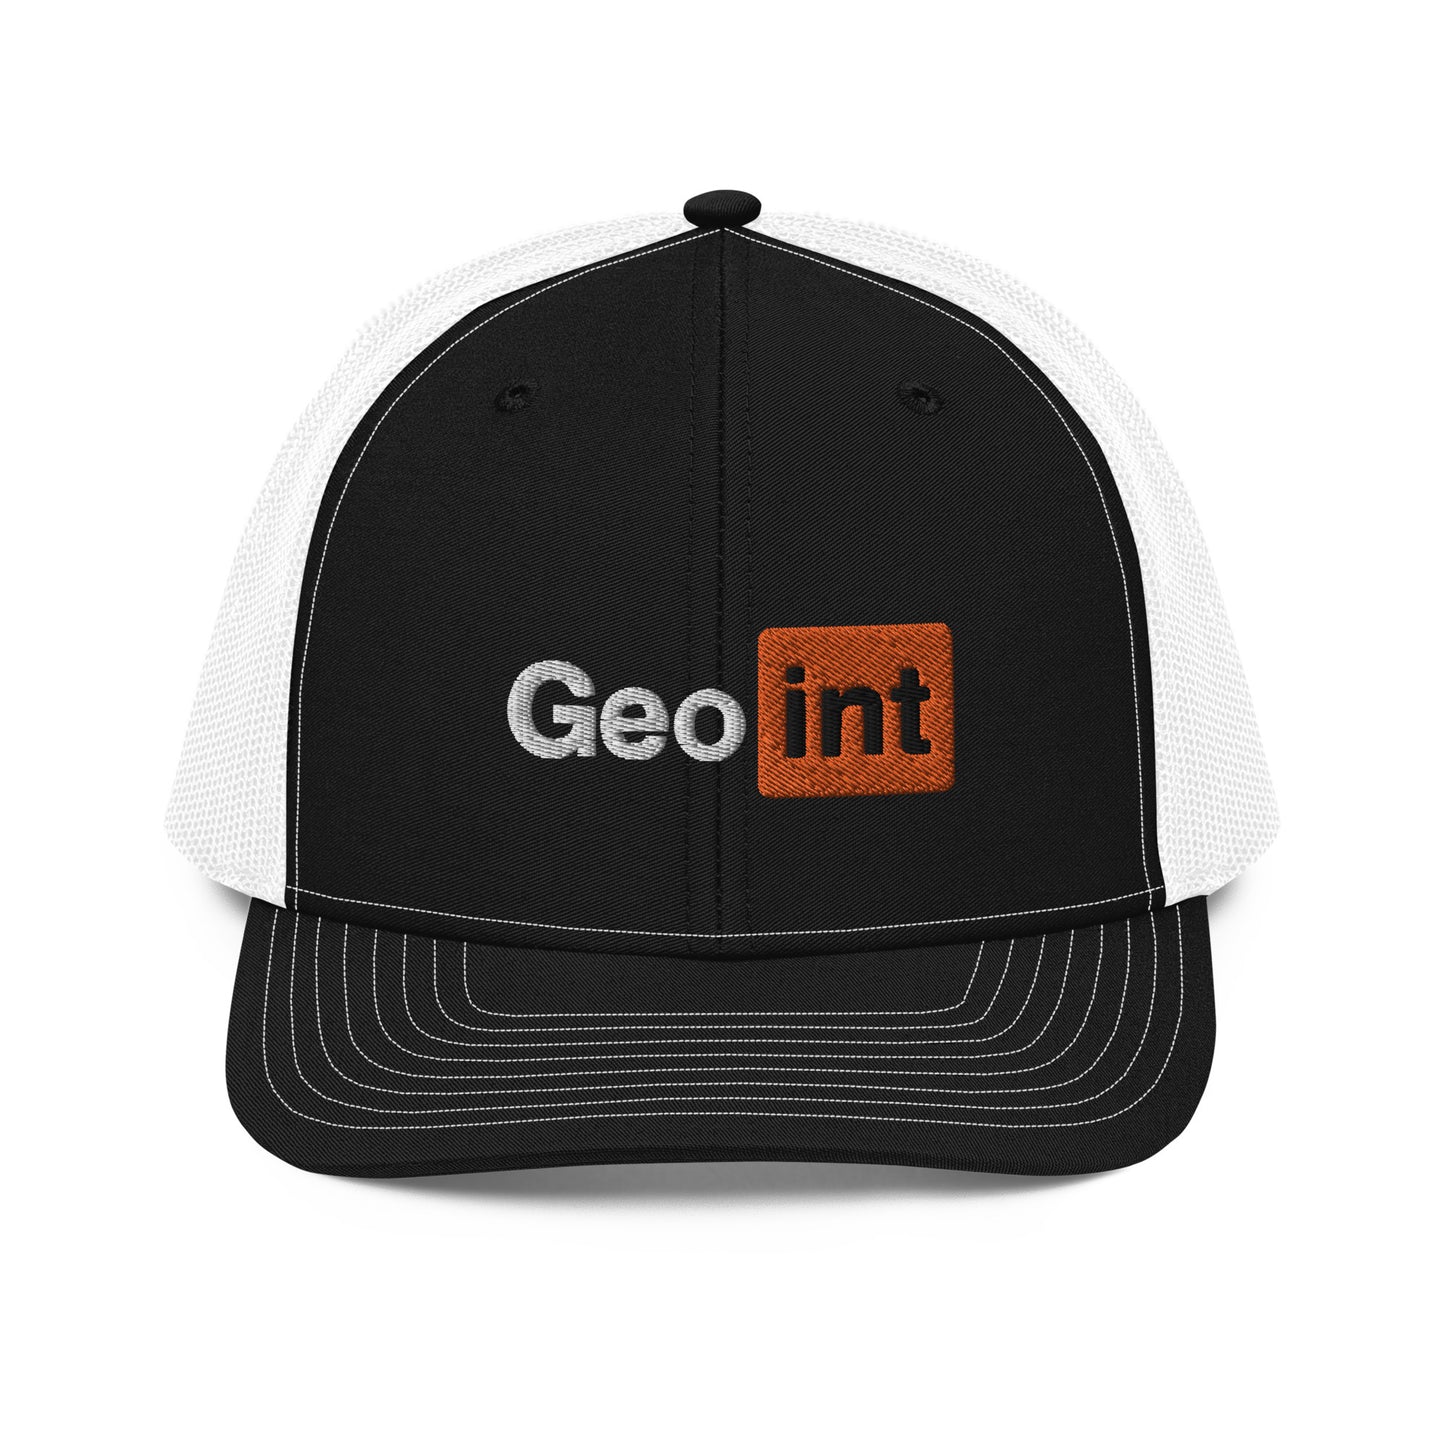 Team GEOINT Trucker Hat